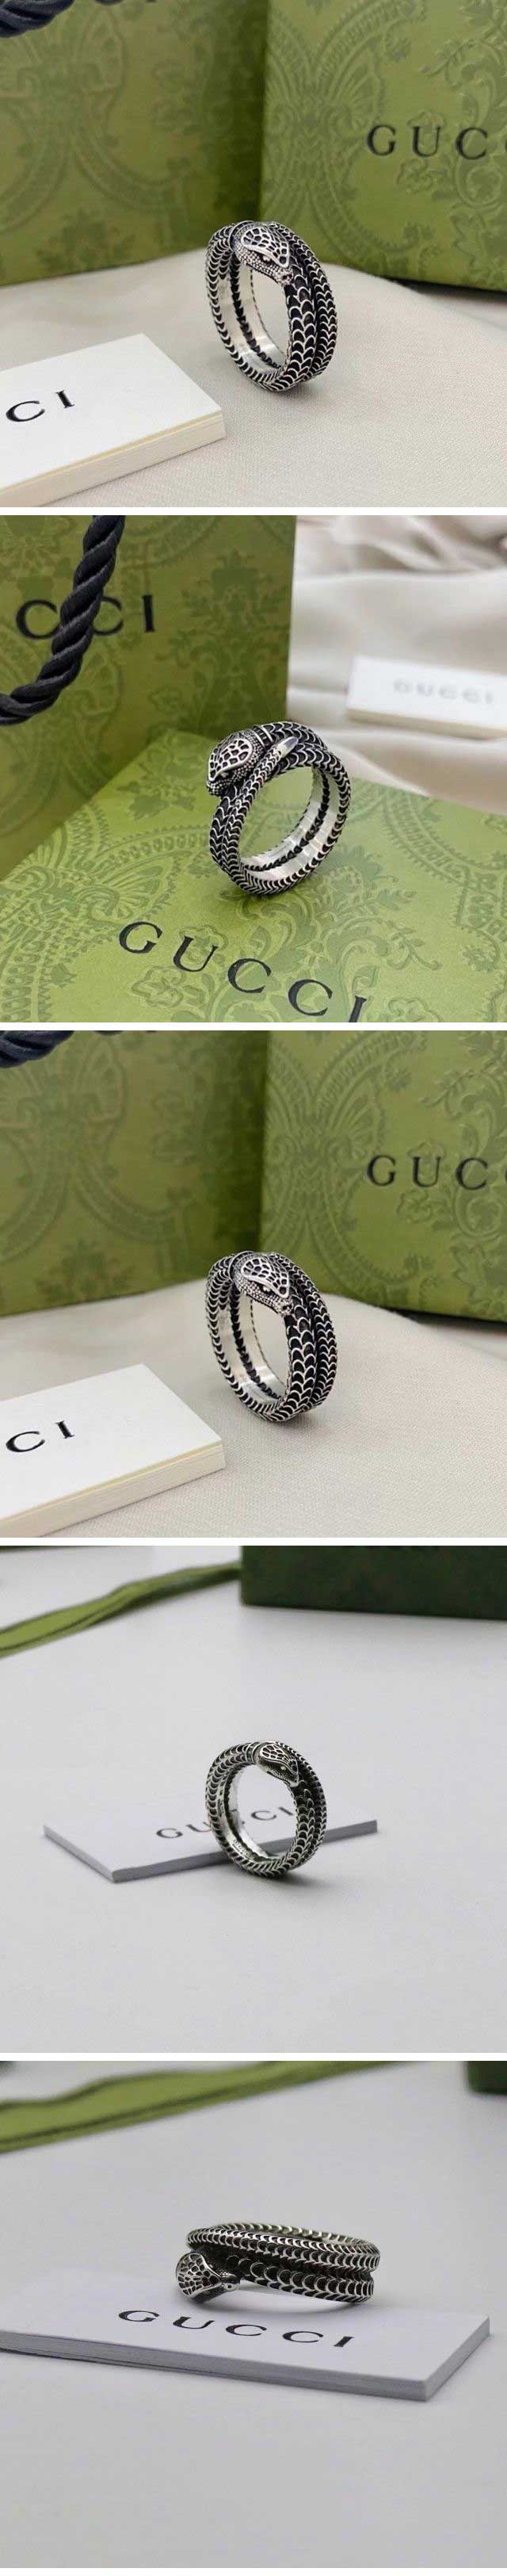 Gucci Snake Design Ring グッチ スネーク デザイン リング